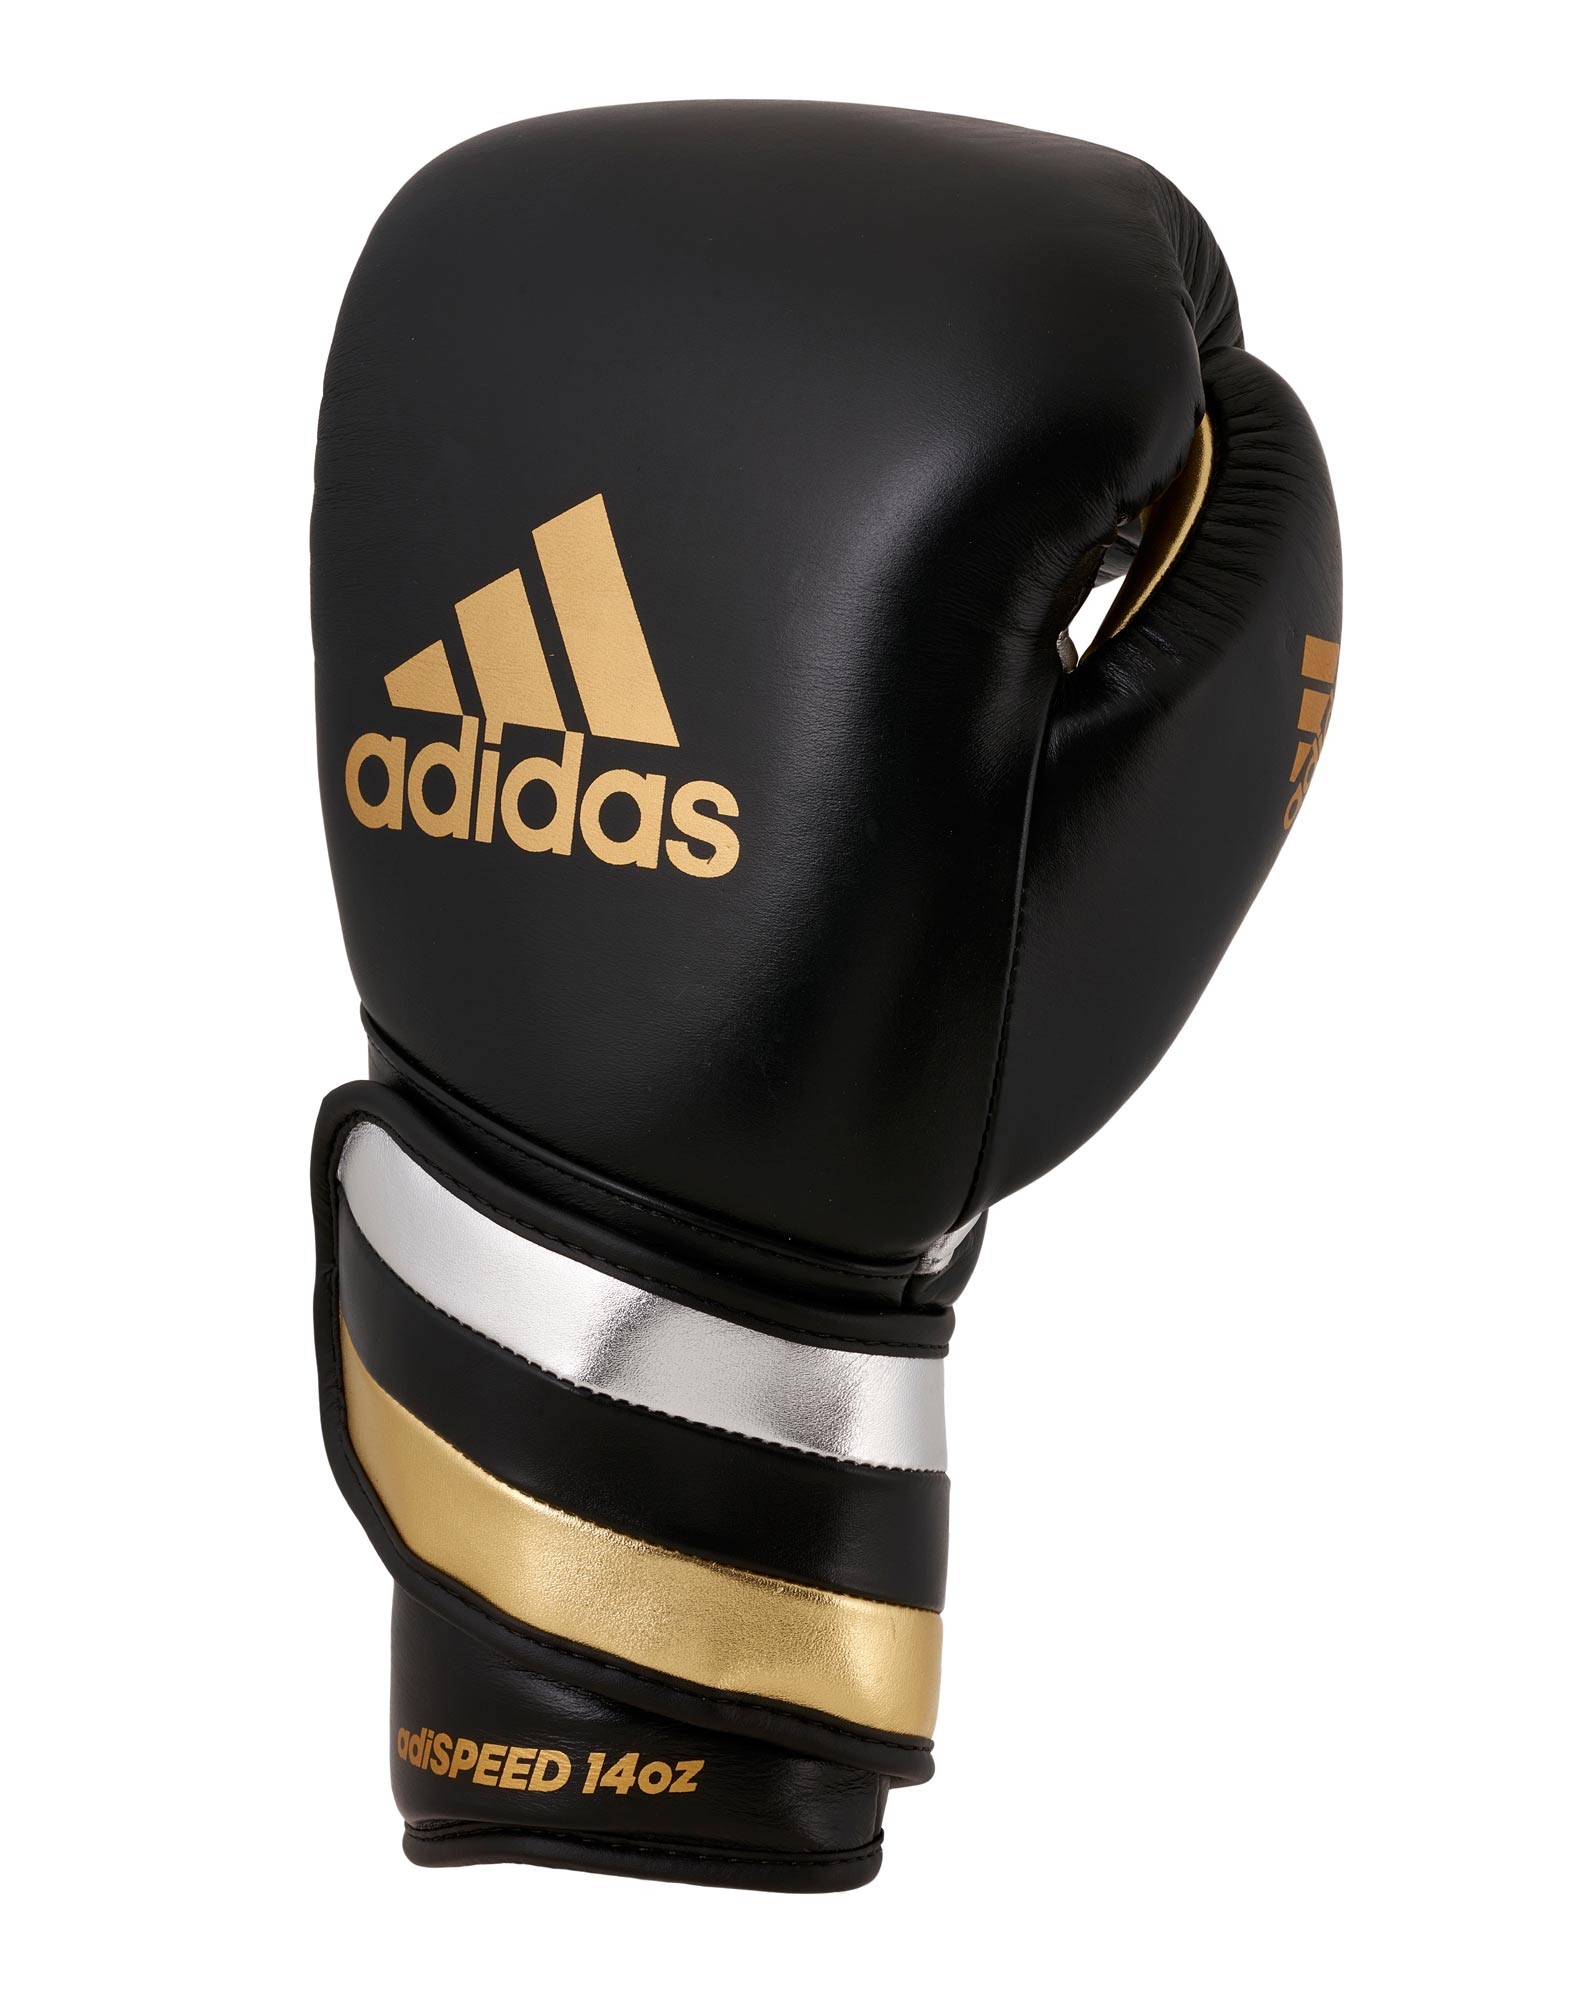 adidas adispeed strap up black/gold/silver, ADISBG501PRO - Adidas